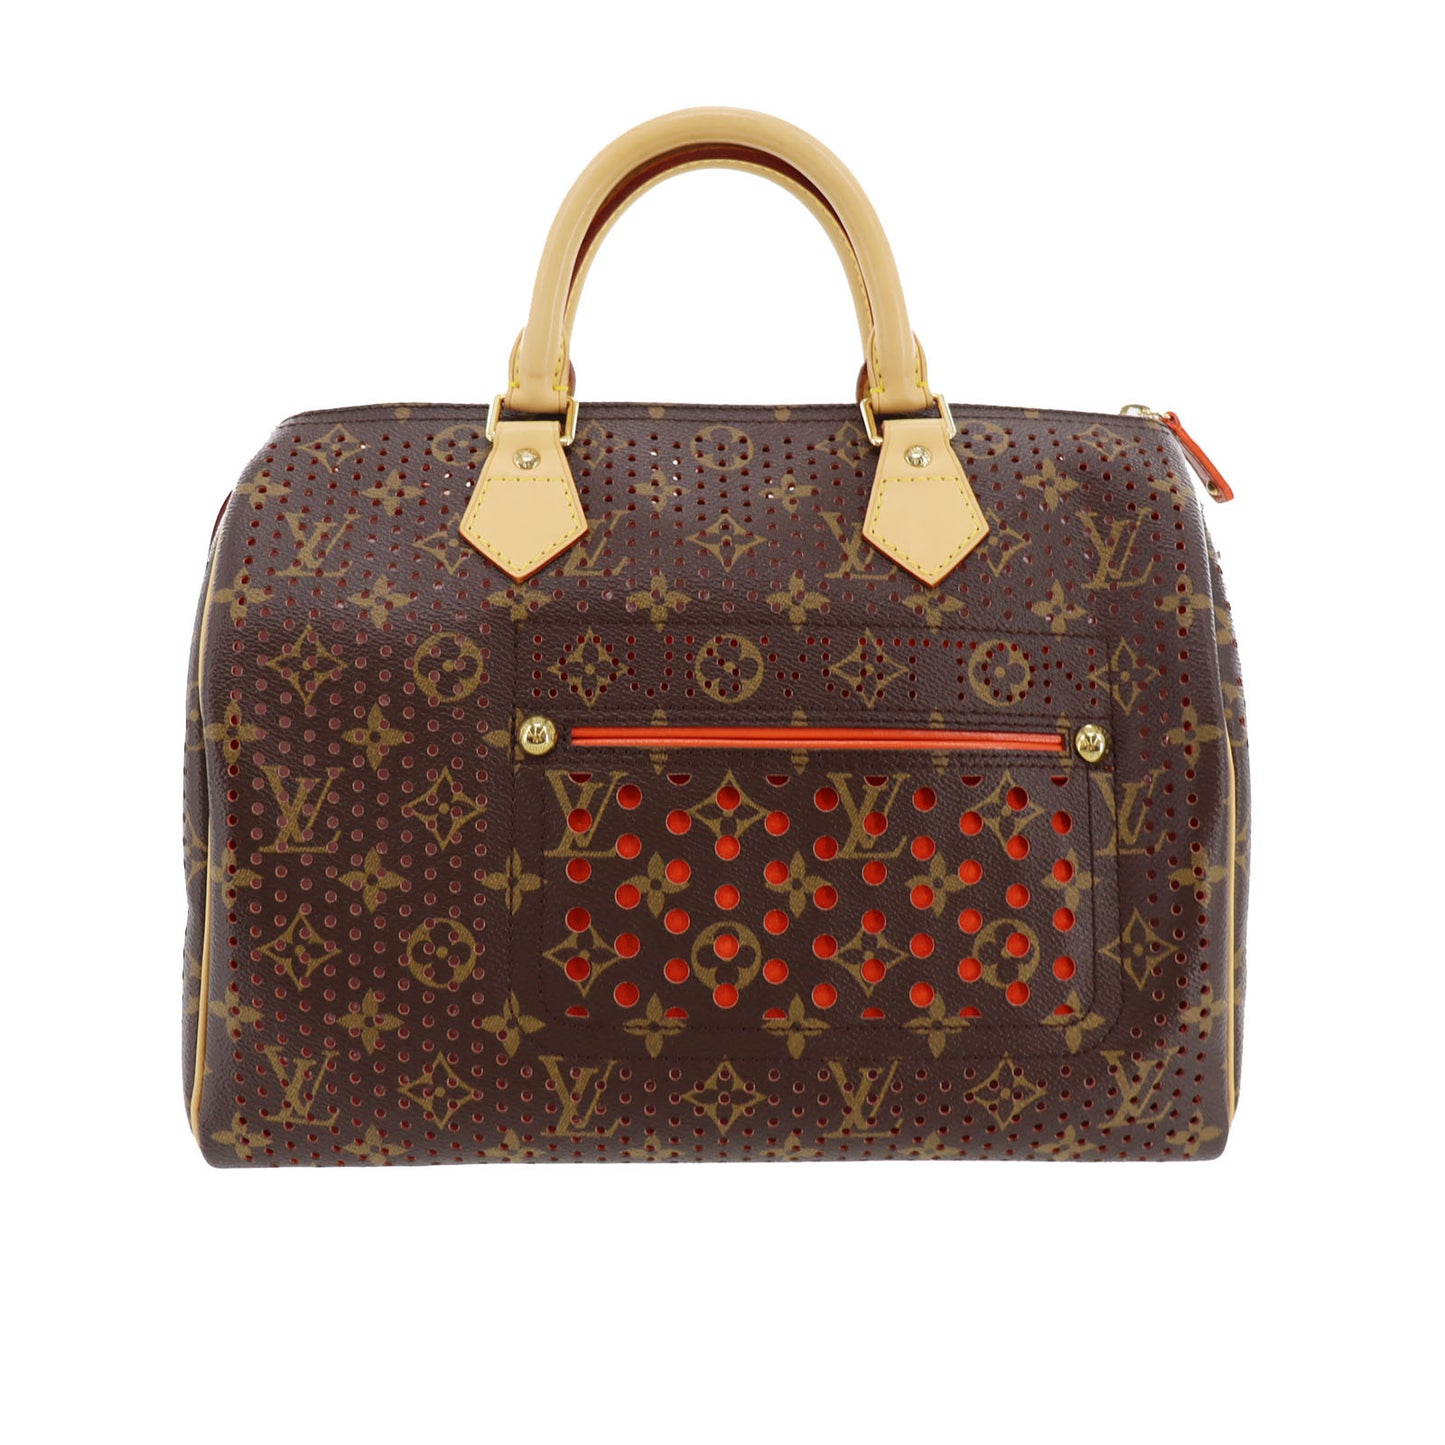 LOUIS VUITTON LV Perfo Speedy 30 Handbag Monogram Leather M95182 #BY837